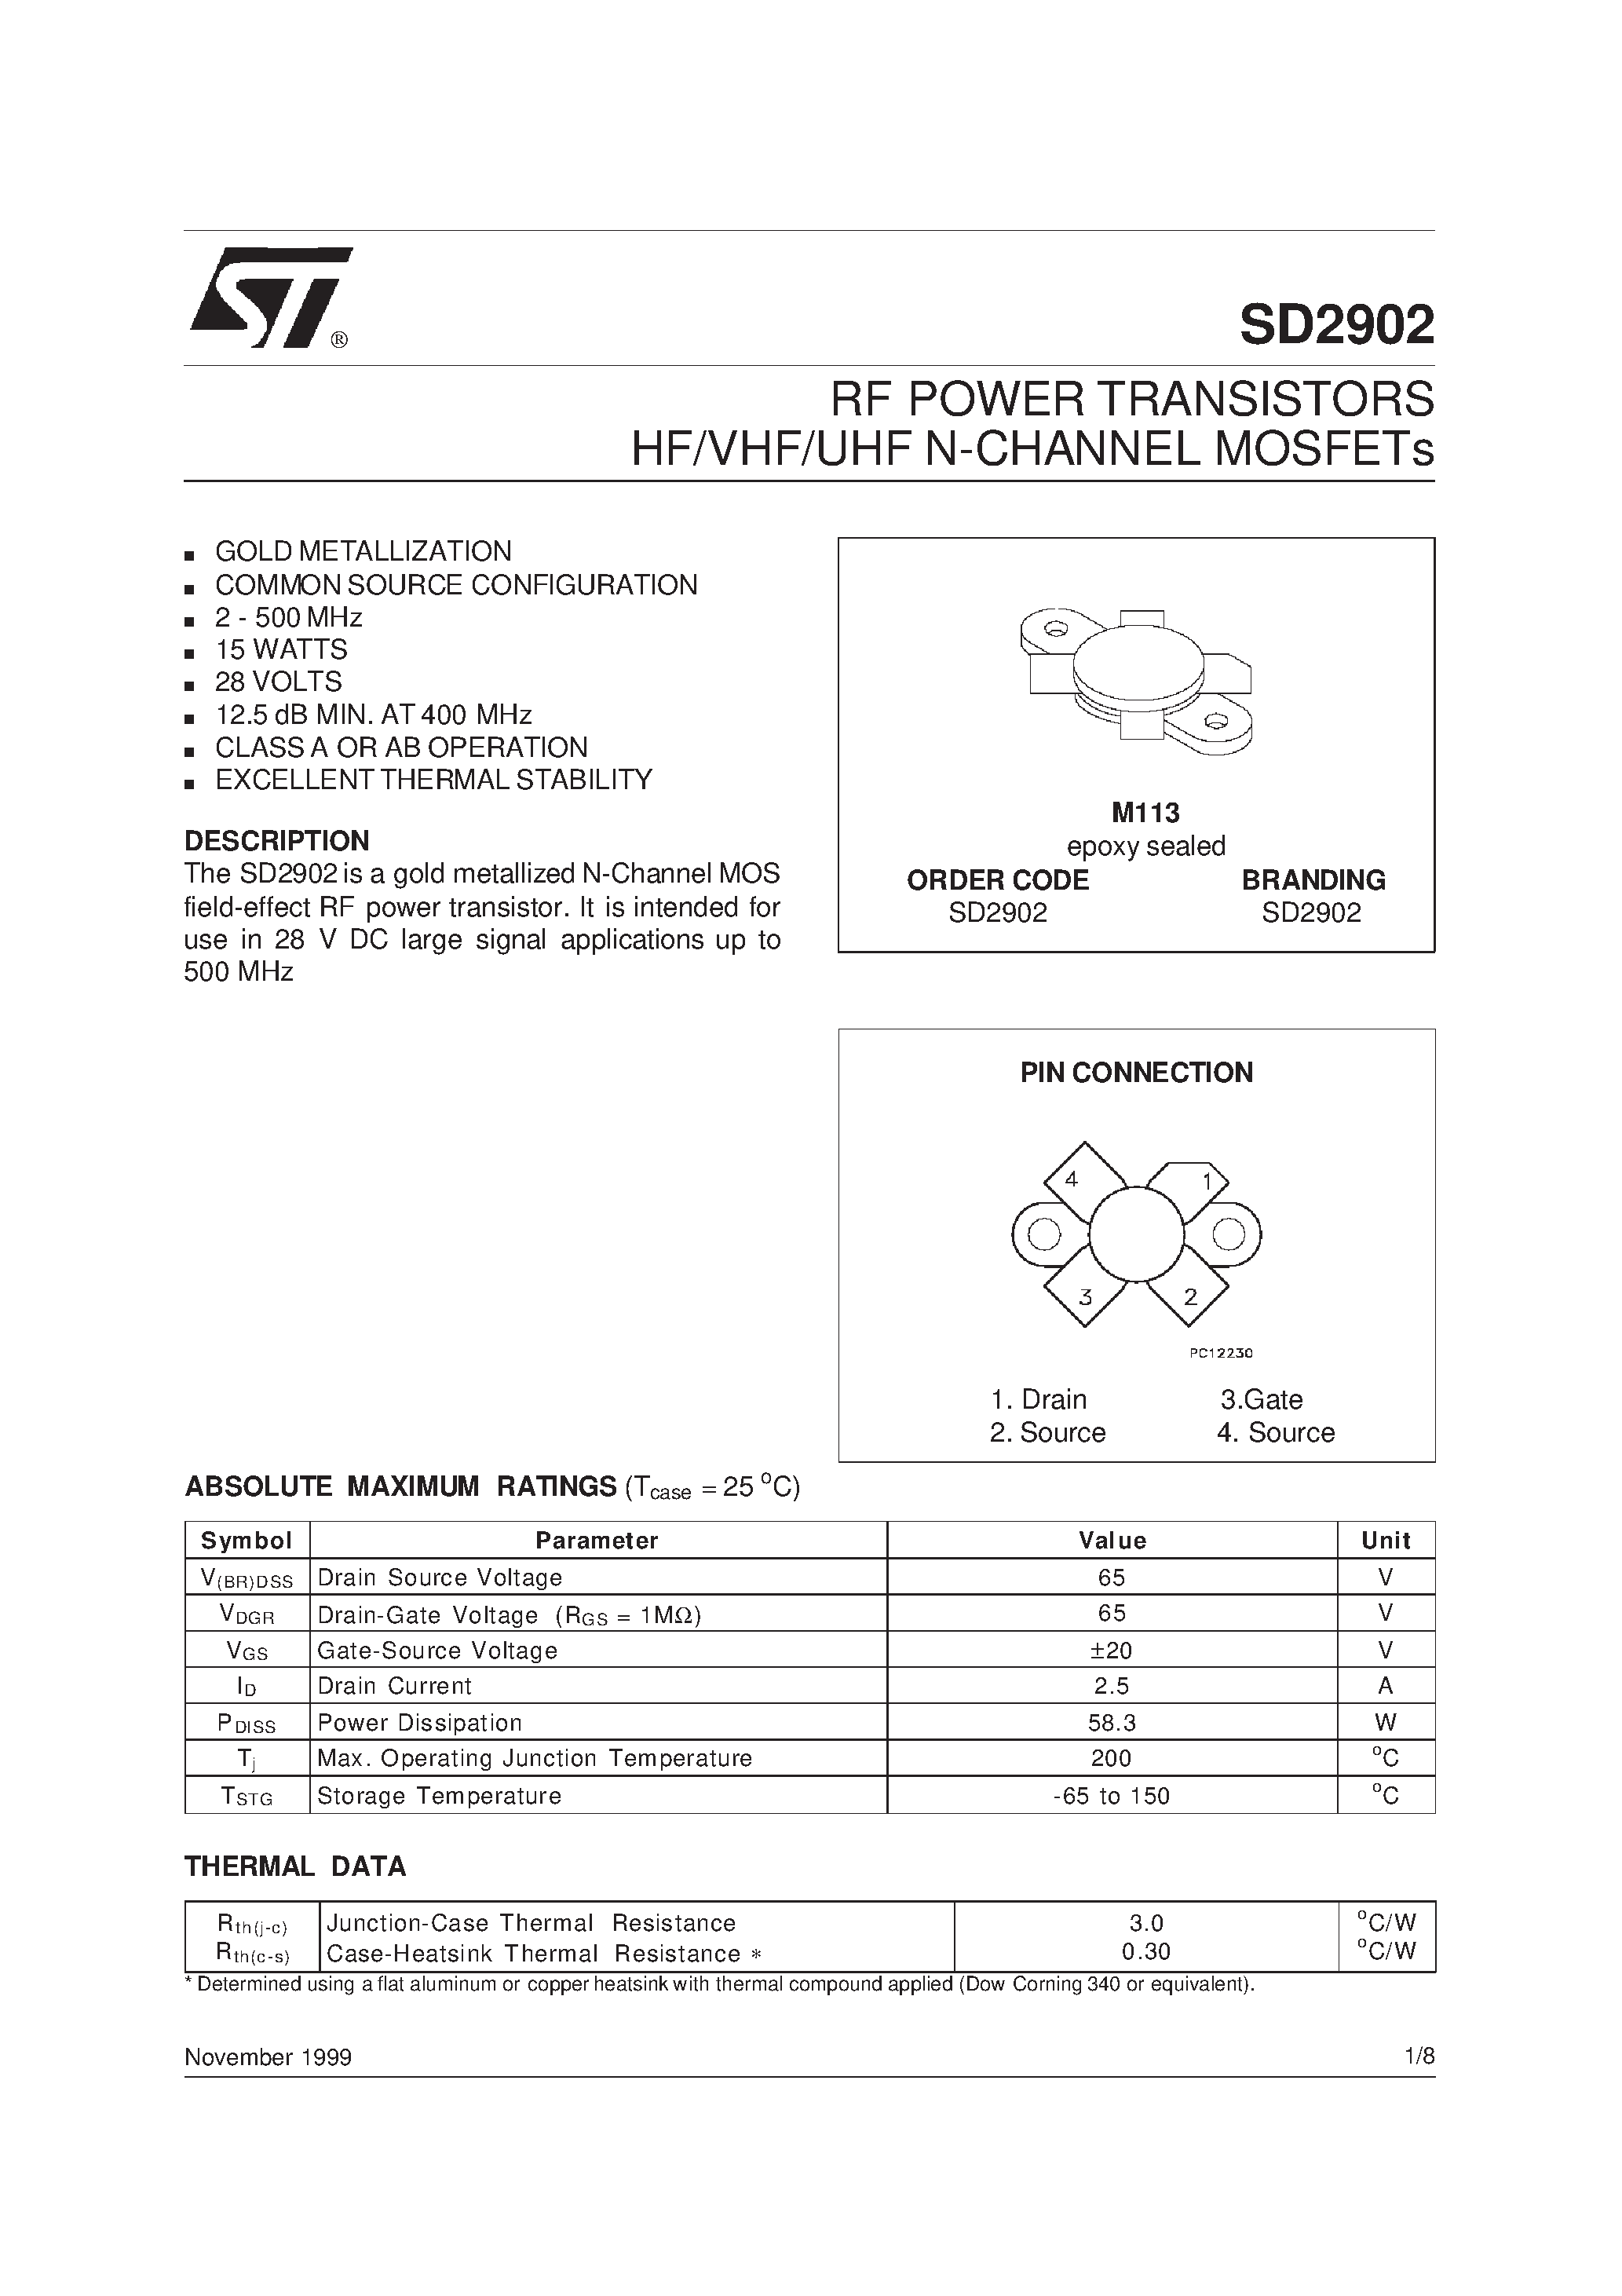 Datasheet SD2902 - RF POWER TRANSISTORS HF/VHF/UHF N-CHANNEL MOSFETs page 1